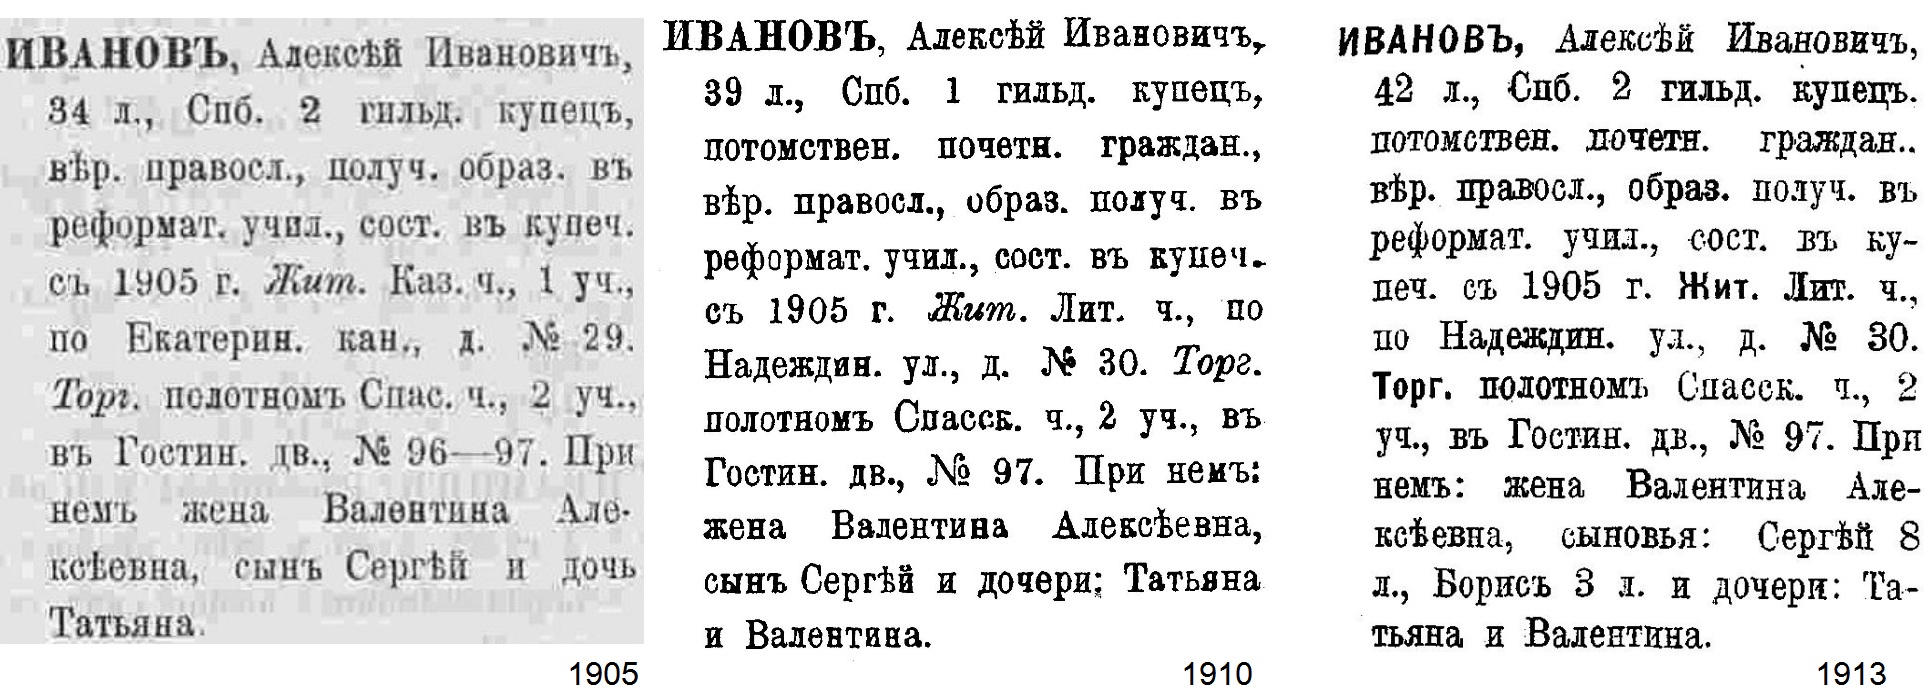 Иванов Алексей Иванович 1905, 1910, 1913.jpg